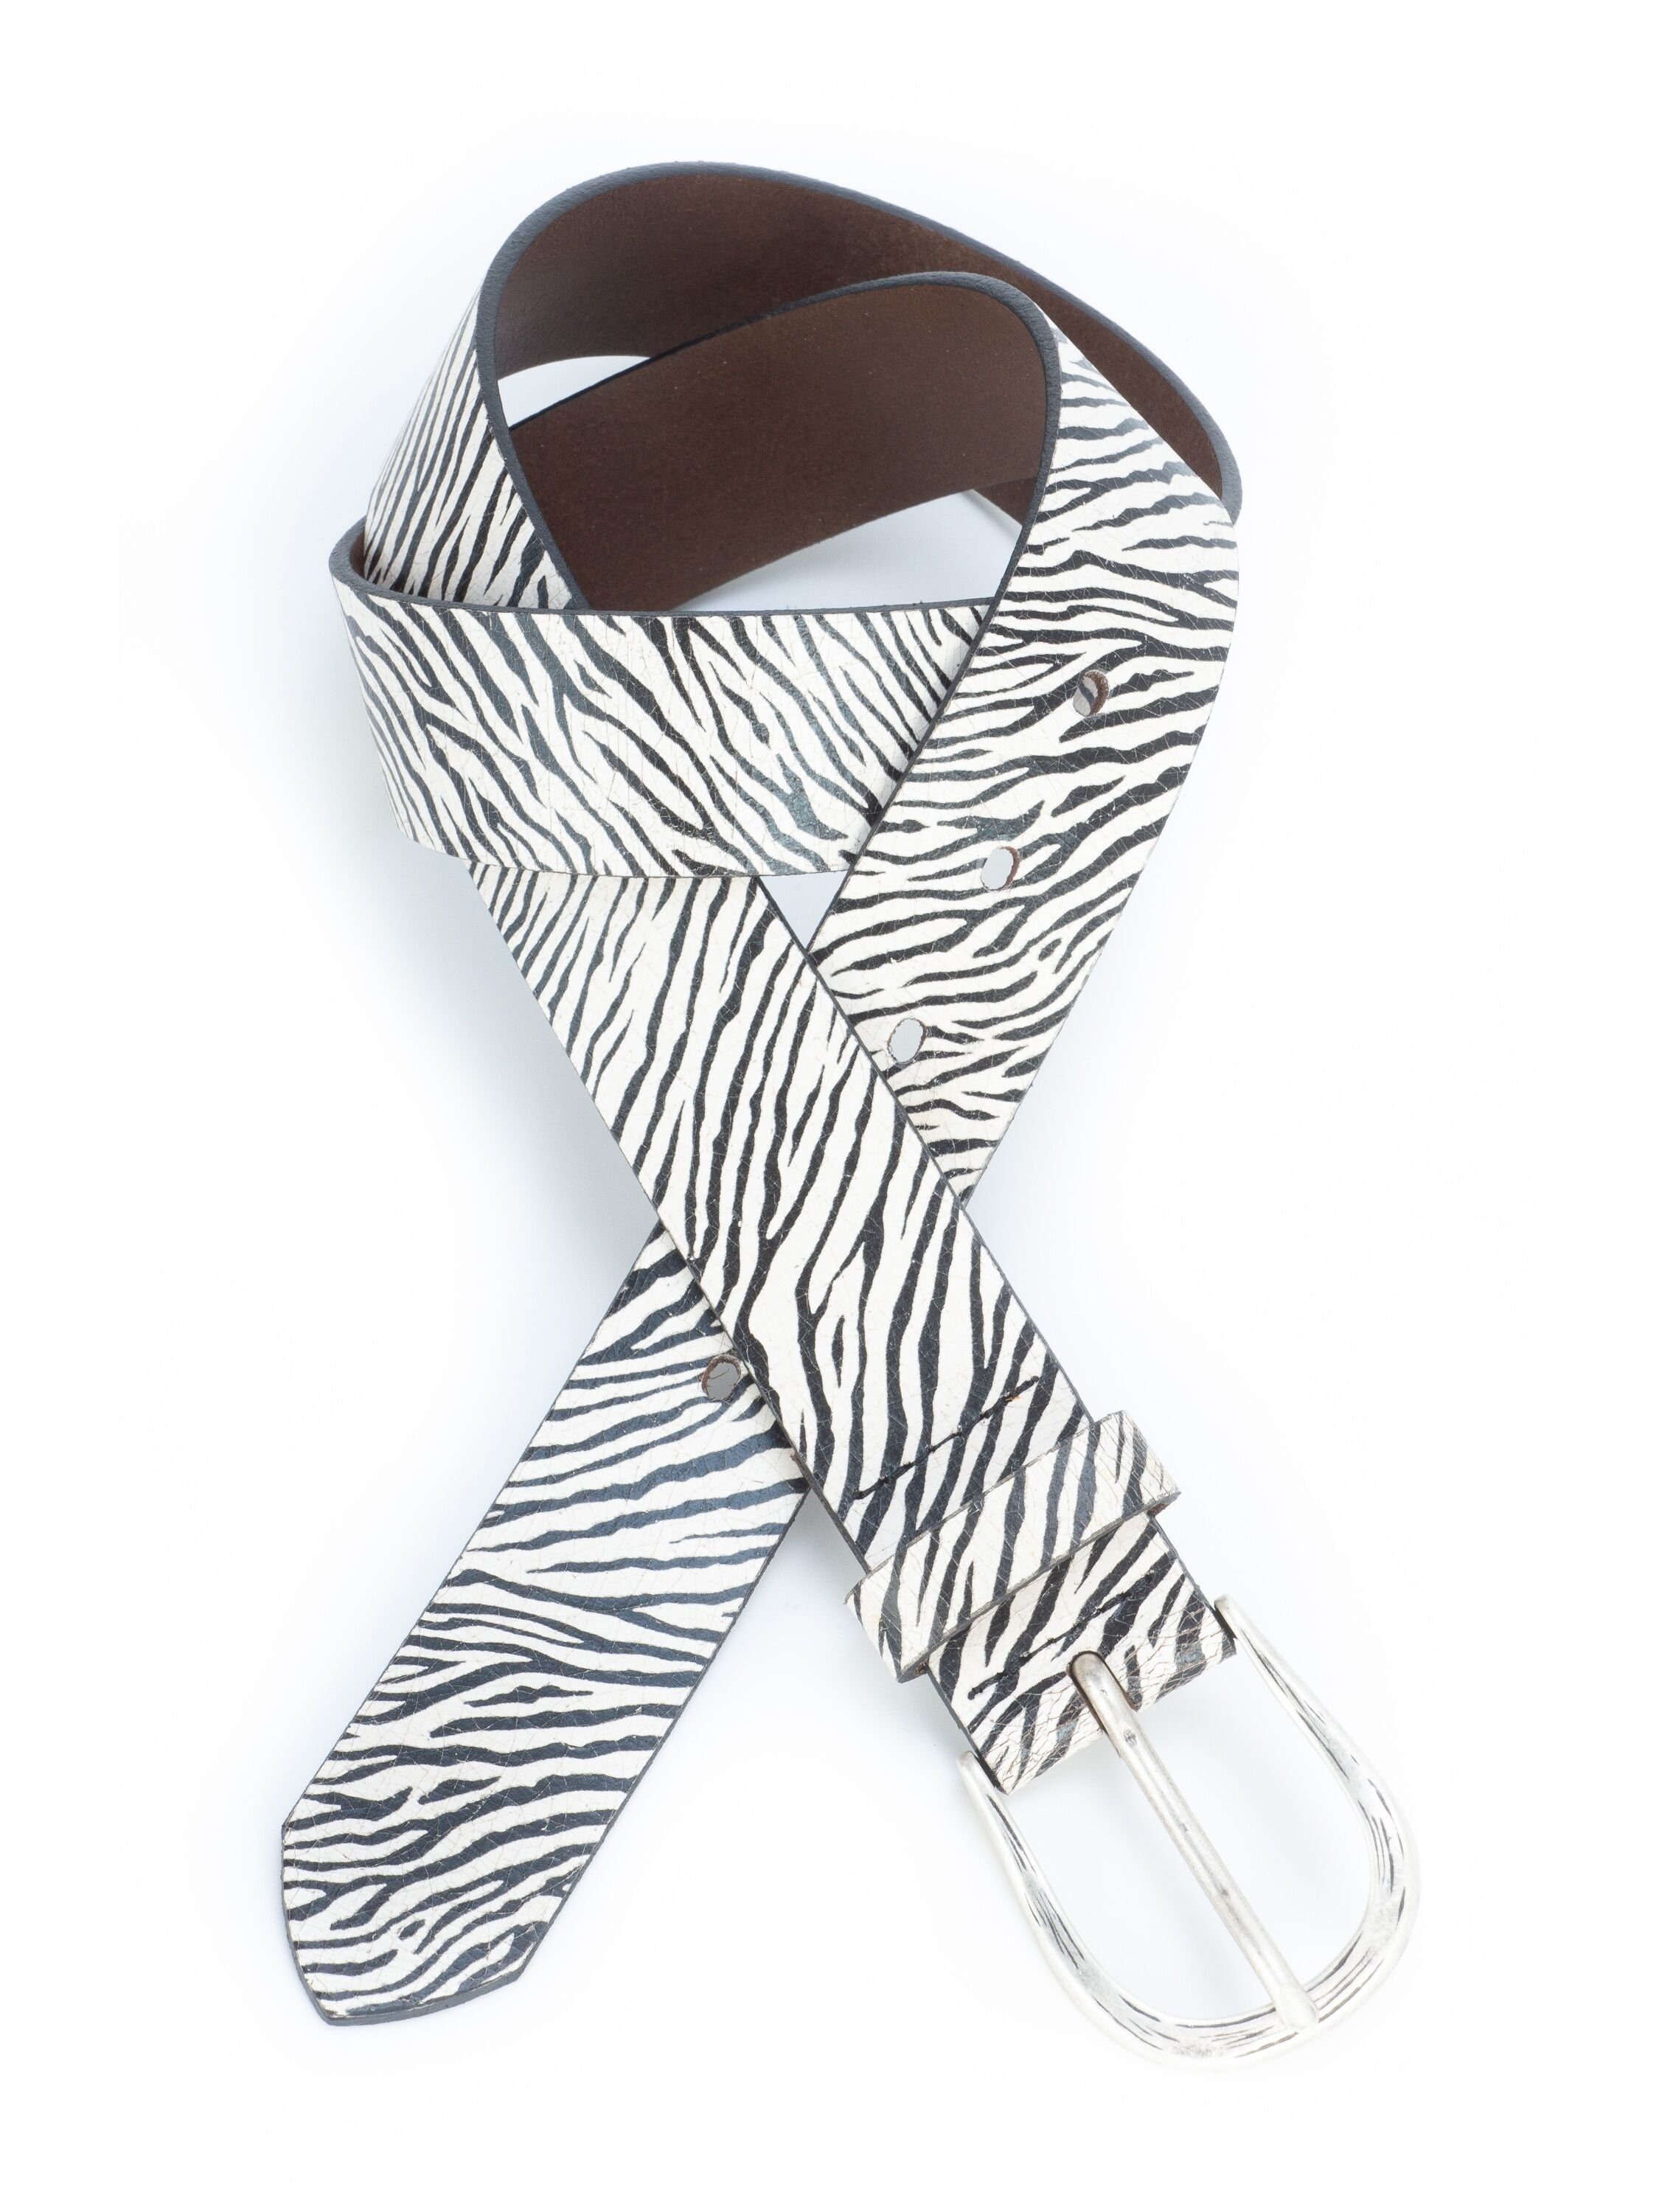 Ledergürtel im BA98-Cologne handgefertigter Zebra Rindledergürtel Animal-Look,